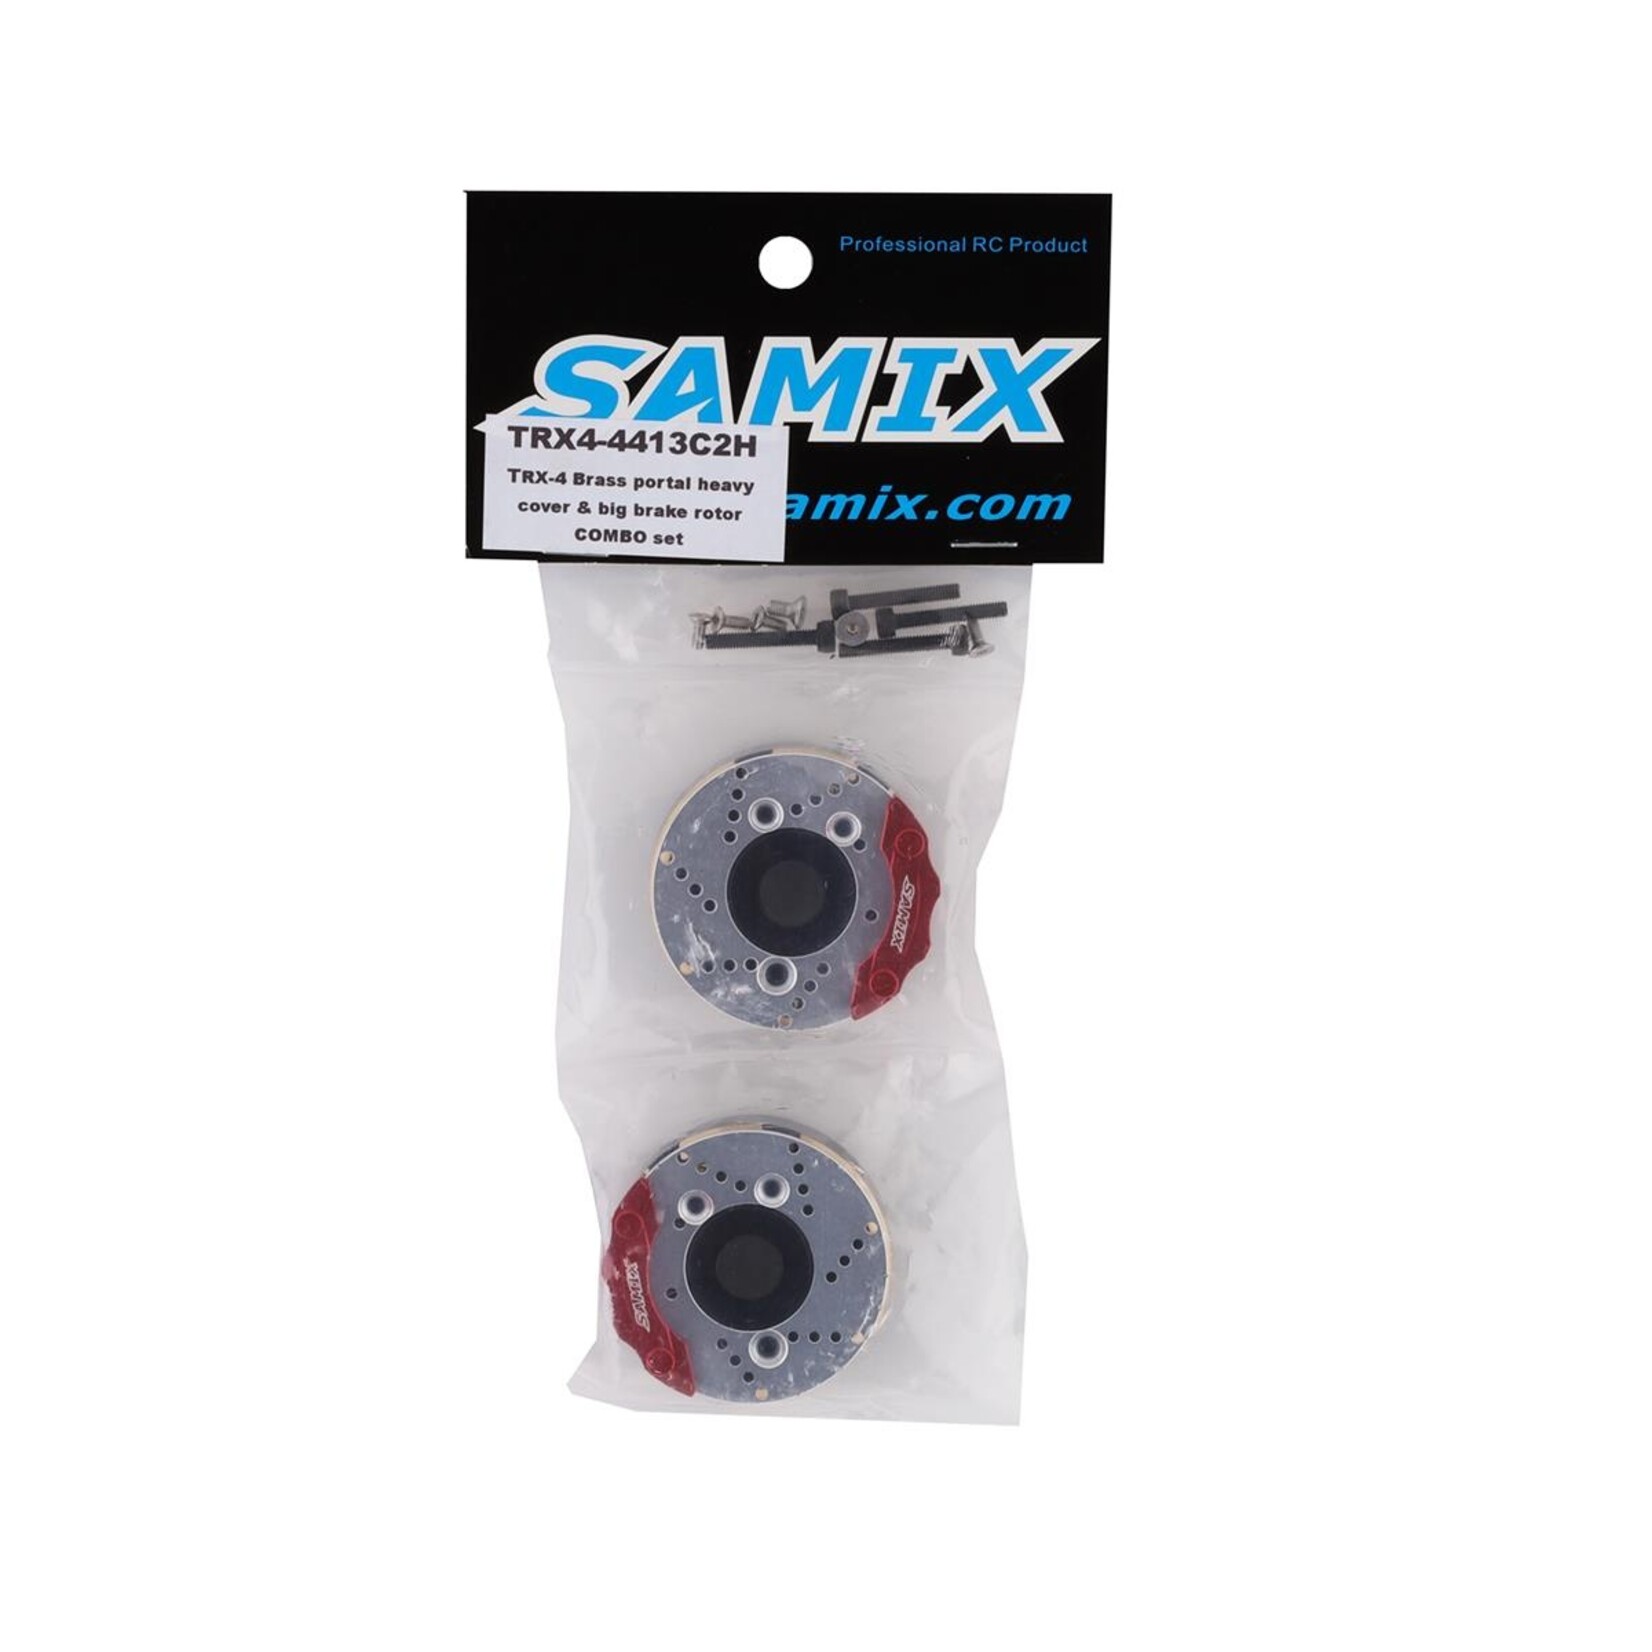 Samix Samix Traxxas TRX-4 "Heavy" Brass Portal Cover & Scale Brake Rotor (2) (91g) #SAMTRX4-4413C2H